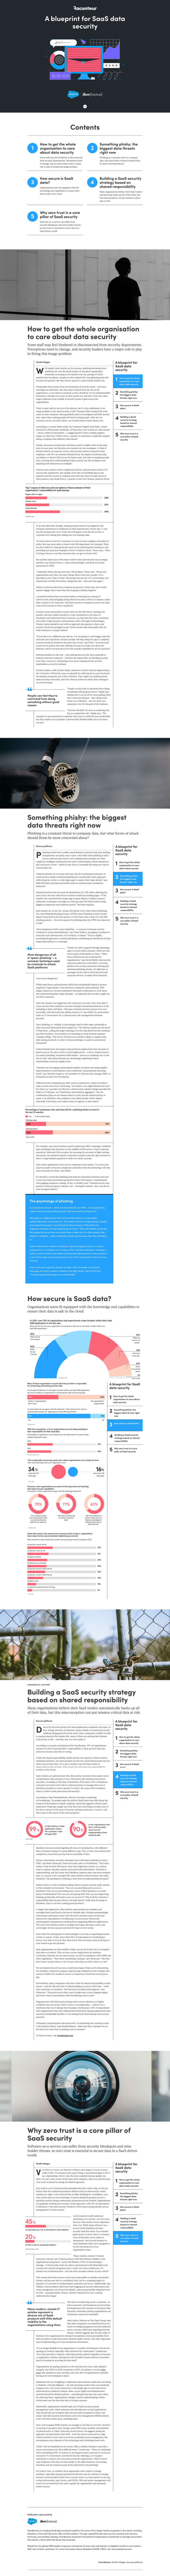 A blueprint for SaaS data security